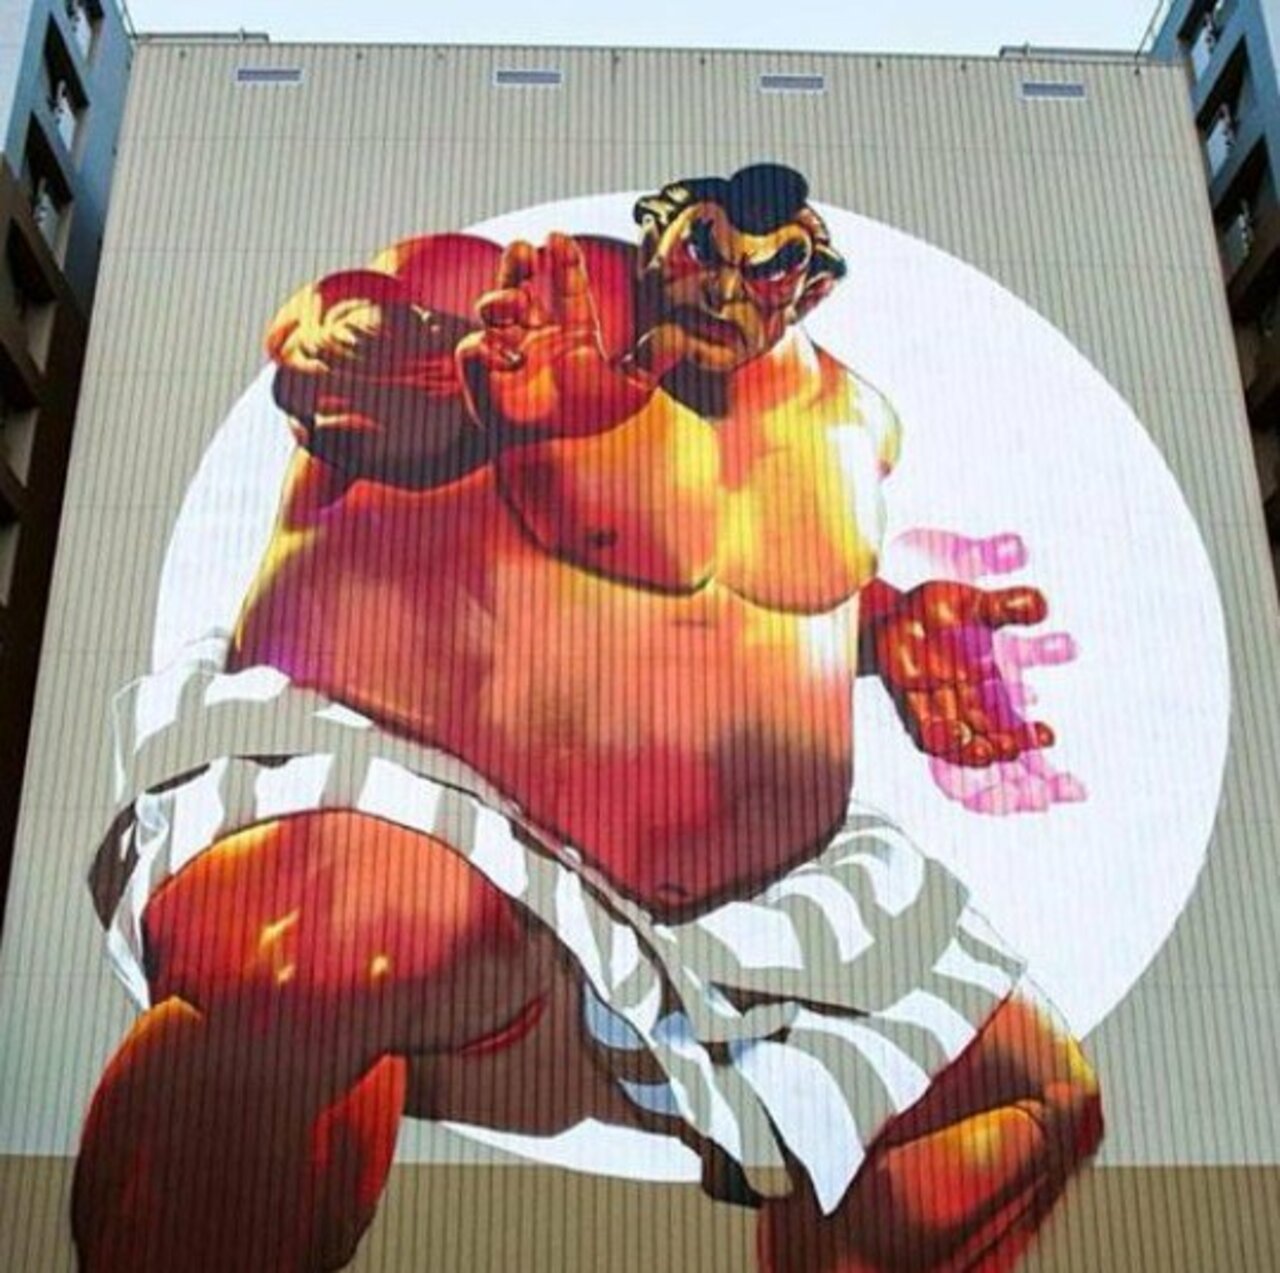 ... #Tokyo #Japan
by #CaseMaclaim ()
#streetart #graffiti #art https://t.co/WzsntjtAR8